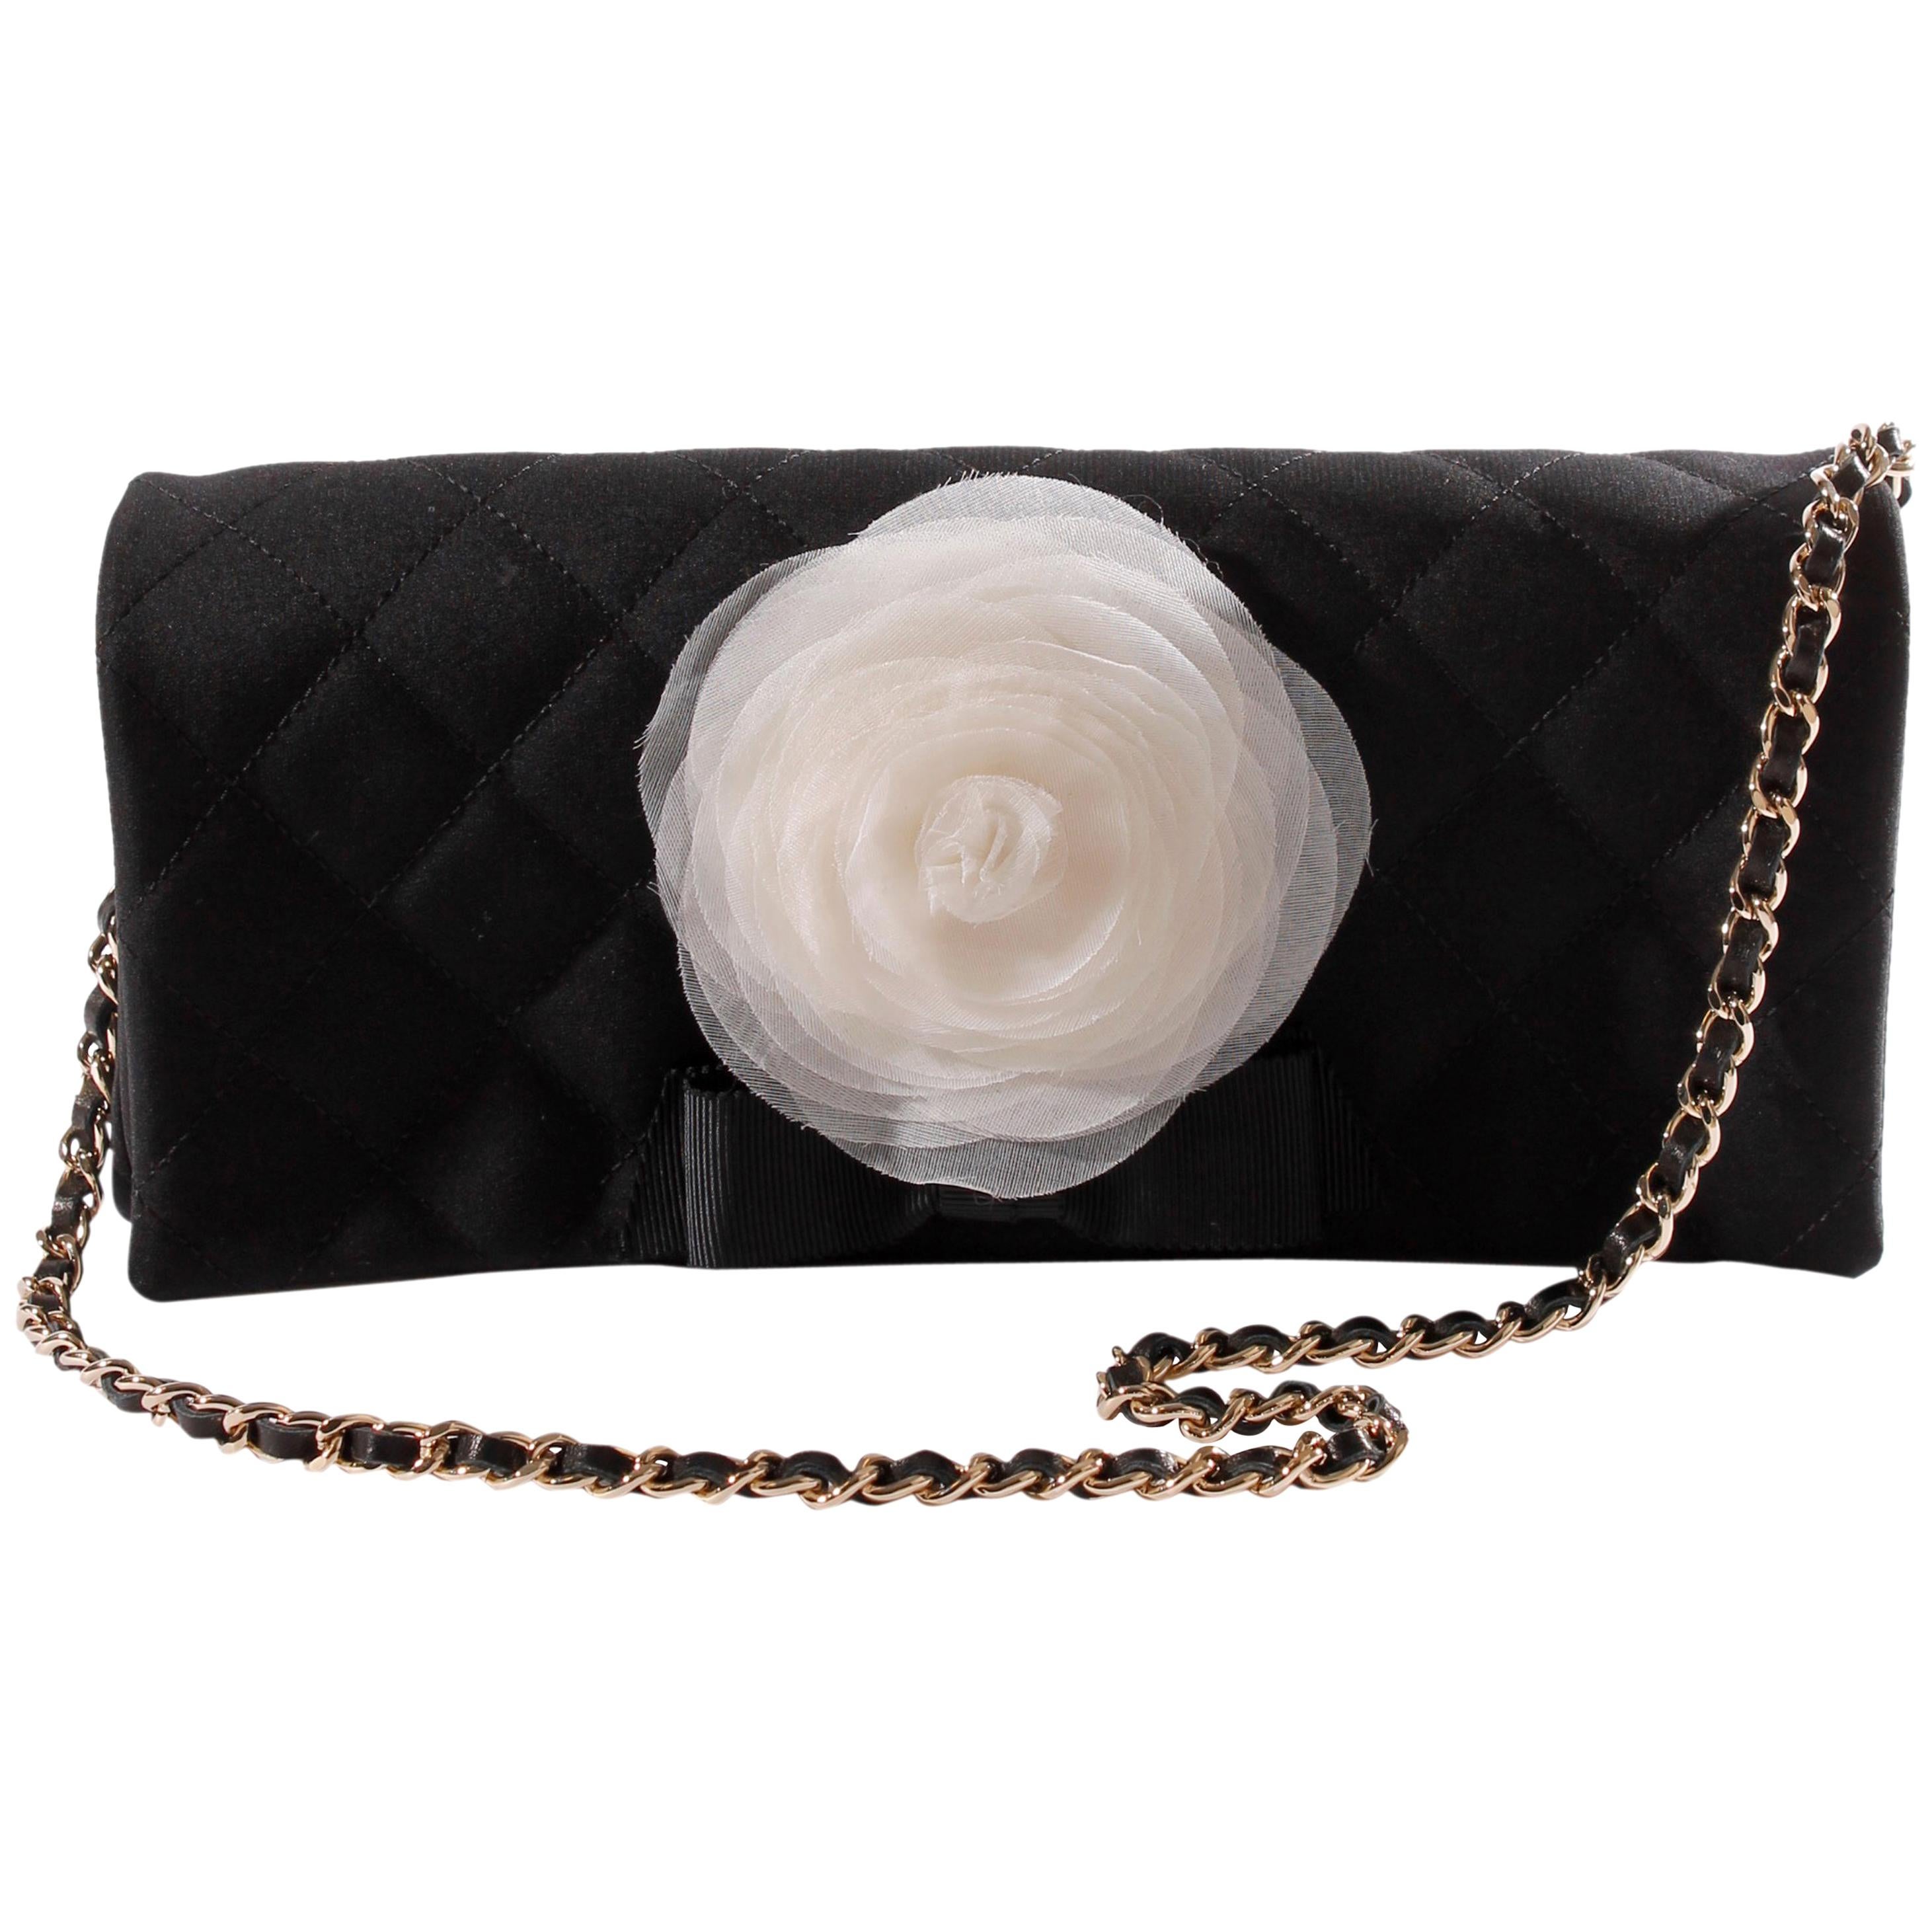 Chanel Satin Camellia Clutch Bag - black/white/silver For Sale